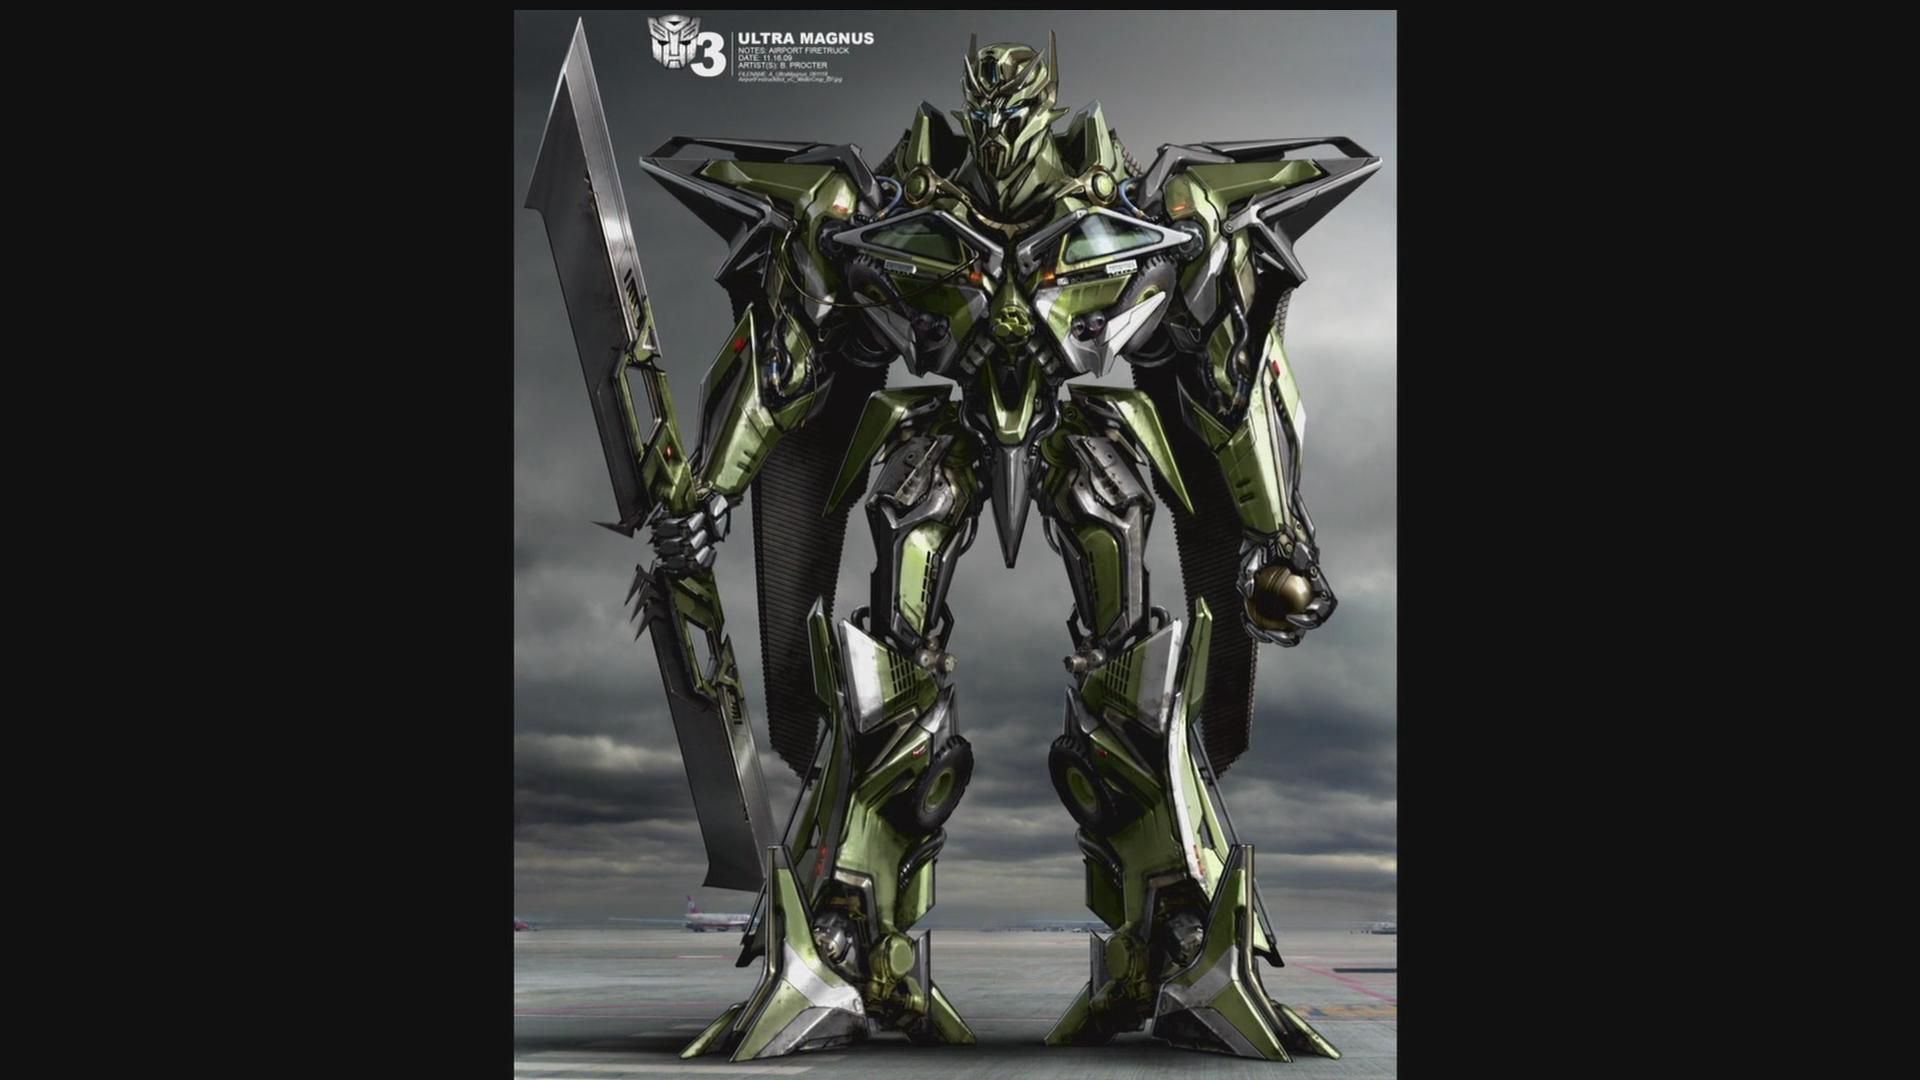 Transformers 4 Grimlock Concept Art HD Wallpaper Mheytam5 3 Ultra Magnus